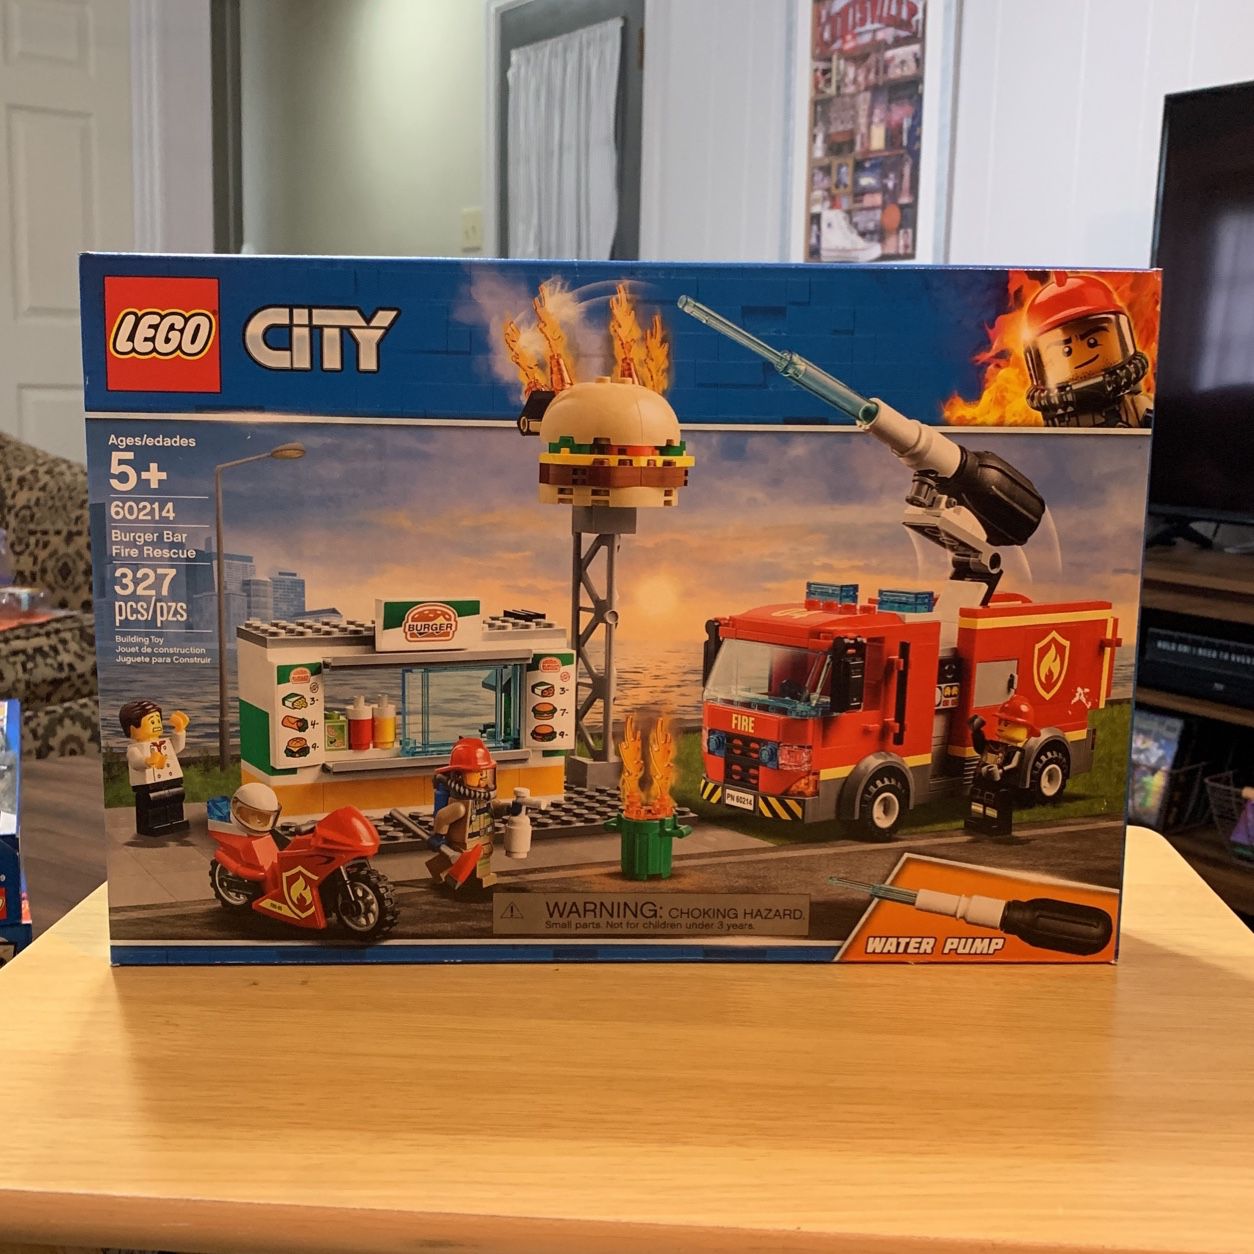 offer Vilje Amerika Lego city 60214 Burger bar fire rescue for Sale in Little Rock, AR - OfferUp